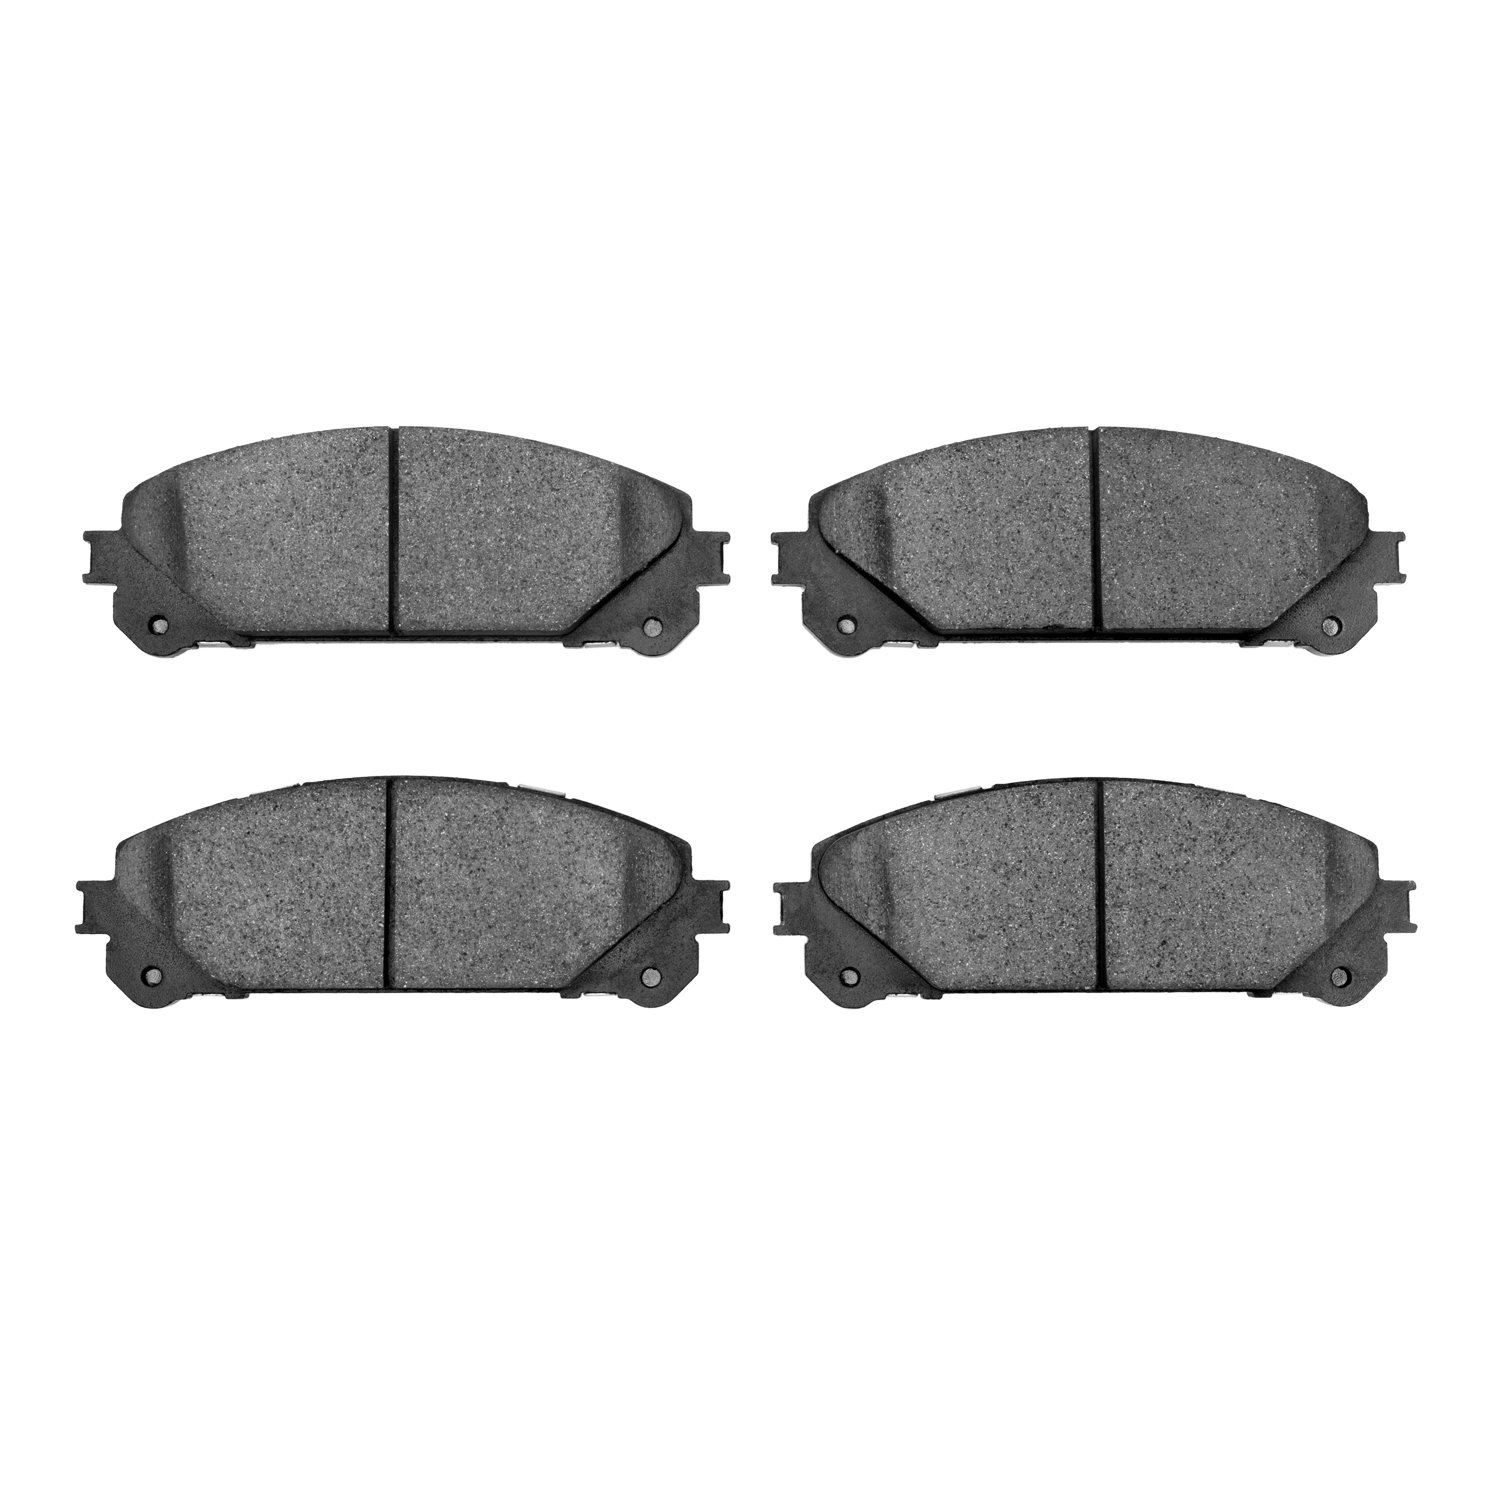 1551-1324-00 5000 Advanced Ceramic Brake Pads, Fits Select Multiple Makes/Models, Position: Front